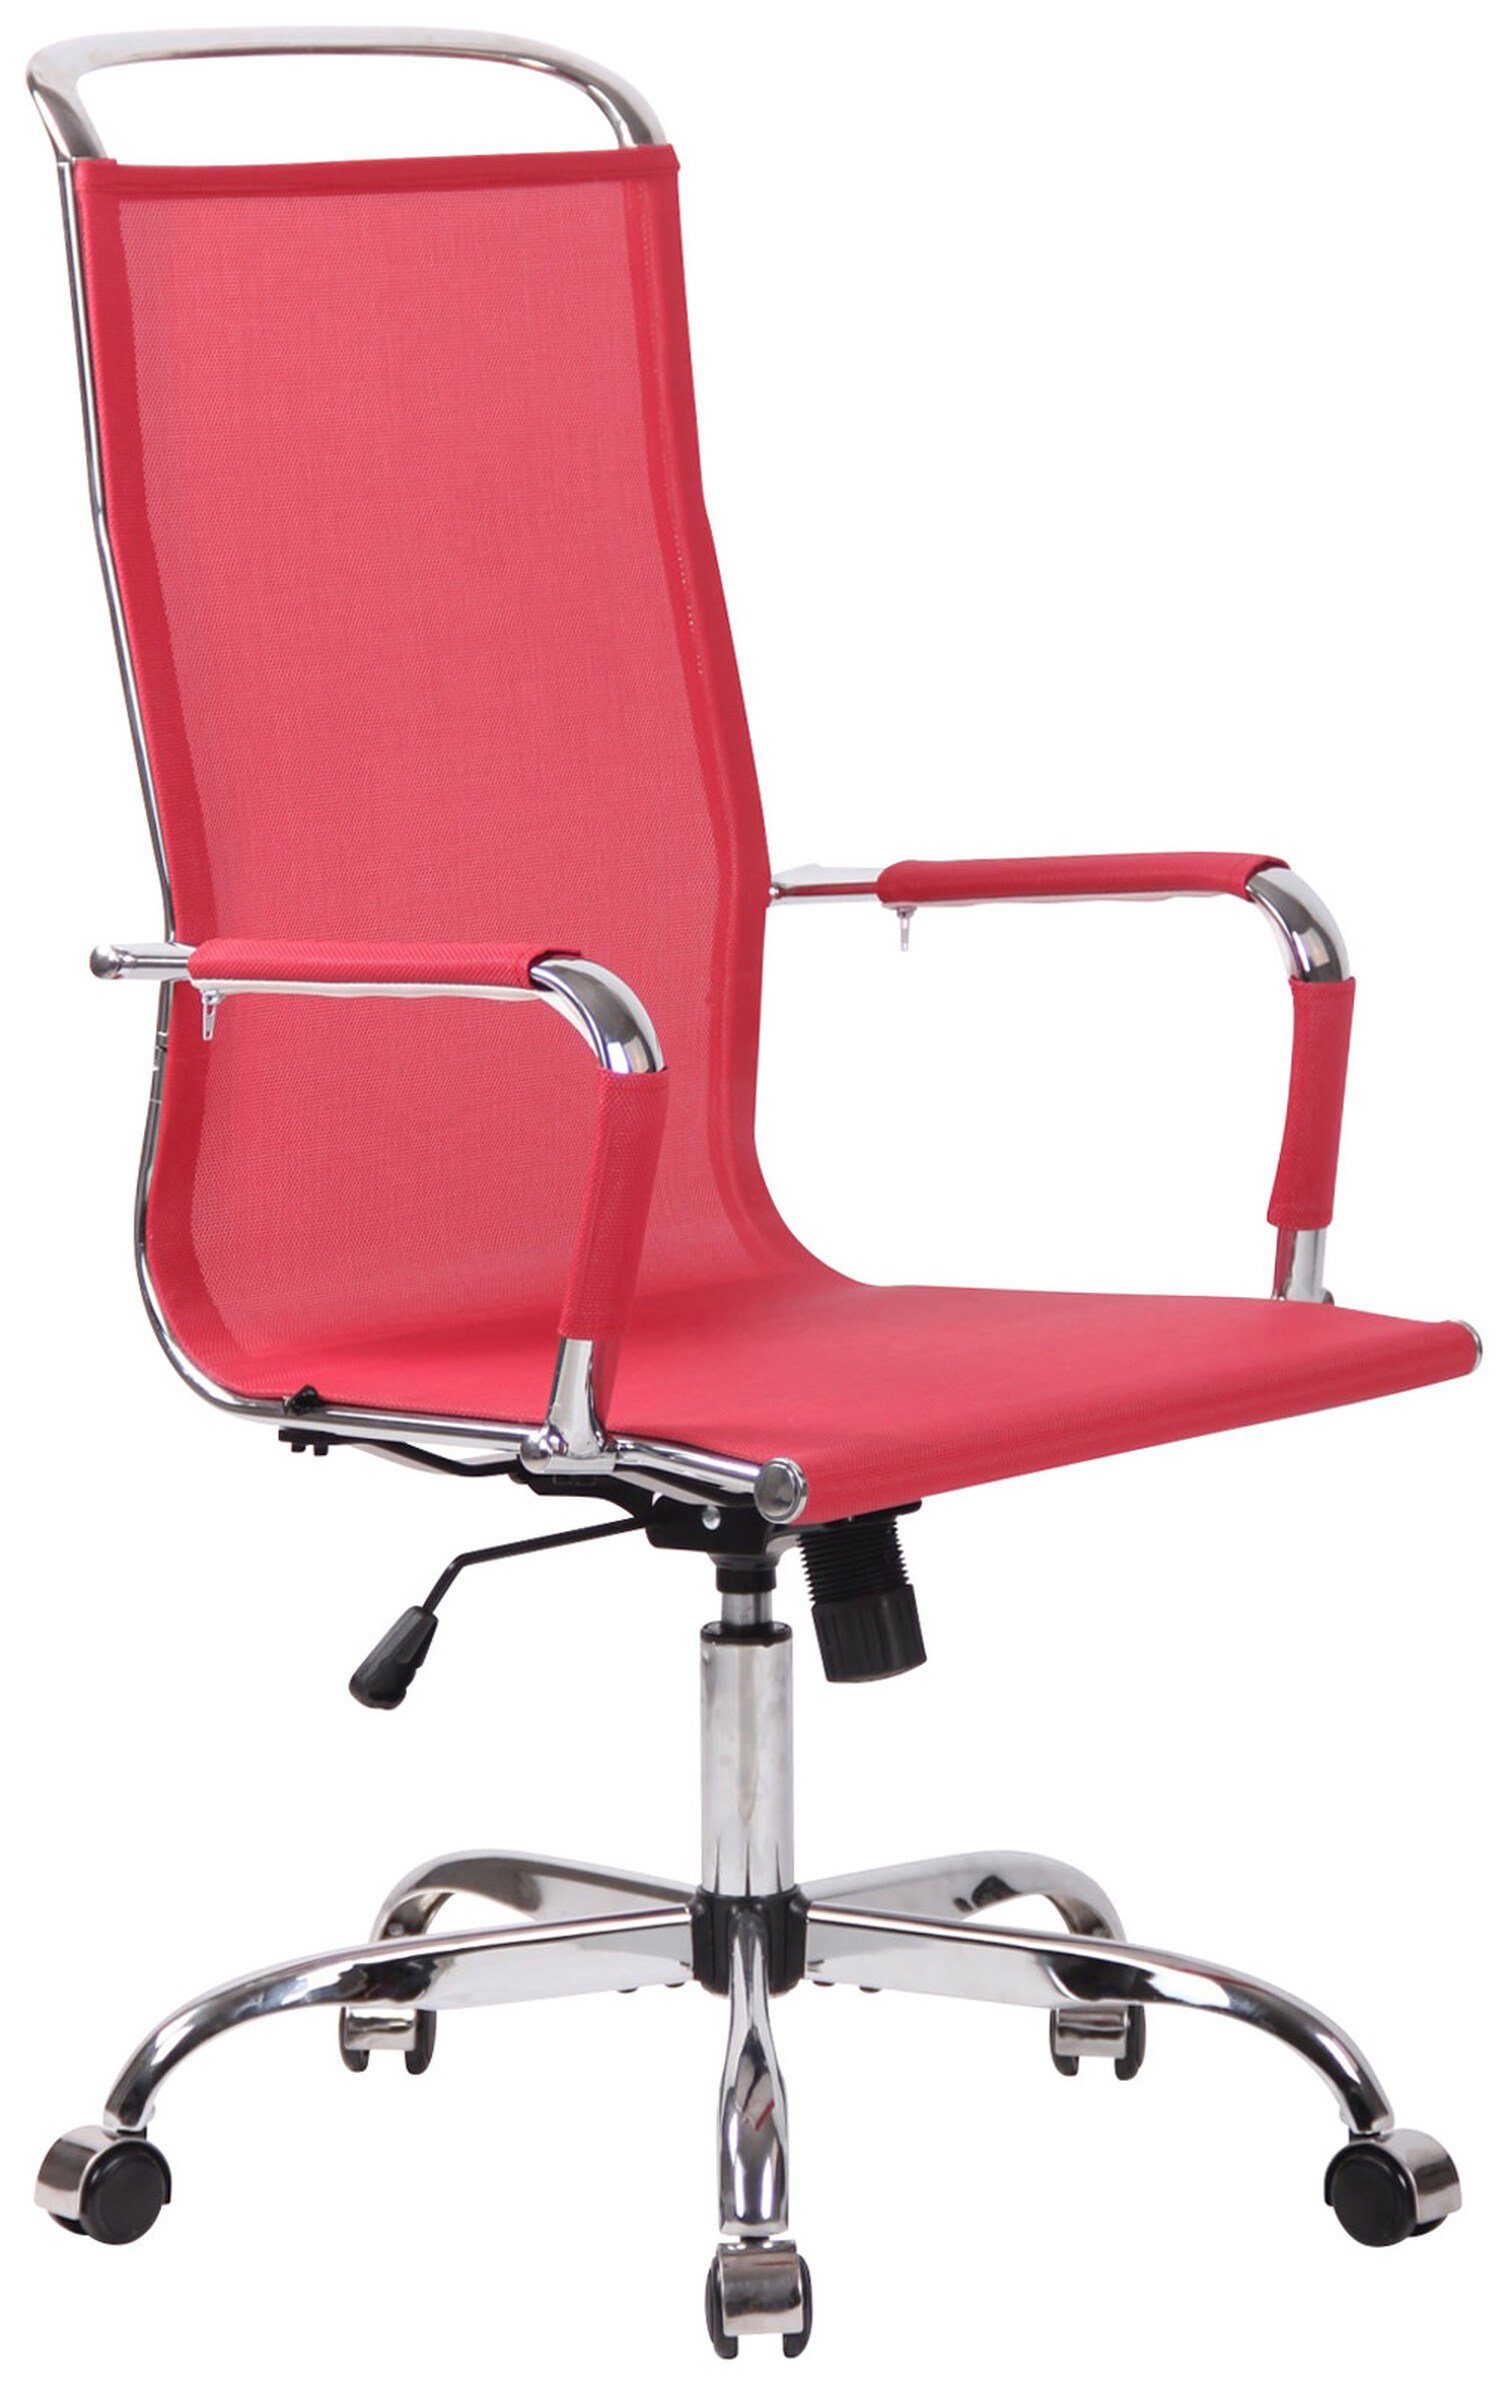 TPFLiving Bürostuhl Brand mit bequemer ergonomisch geformter Rückenlehne (Schreibtischstuhl, Drehstuhl, Chefsessel, Gamingstuhl), Gestell: Metall chrom - Sitzfläche: Netzbezug rot